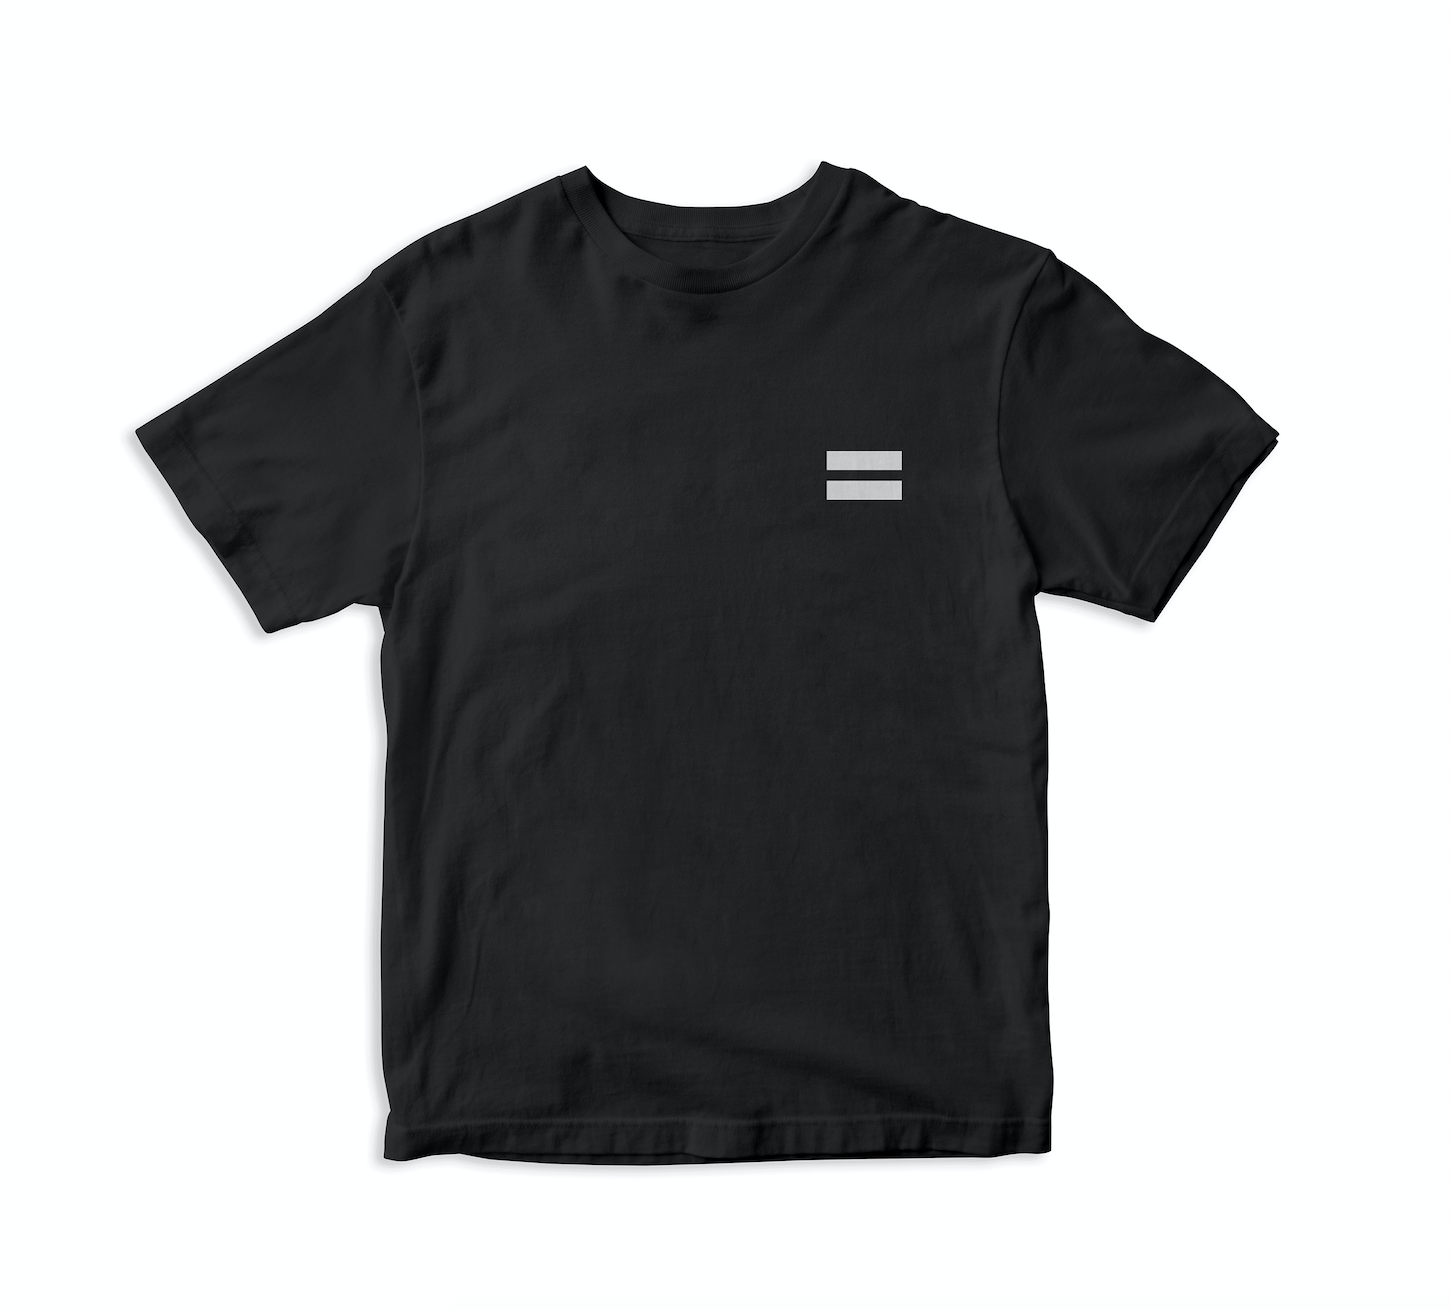 Black Lives Matter - Black T-Shirt